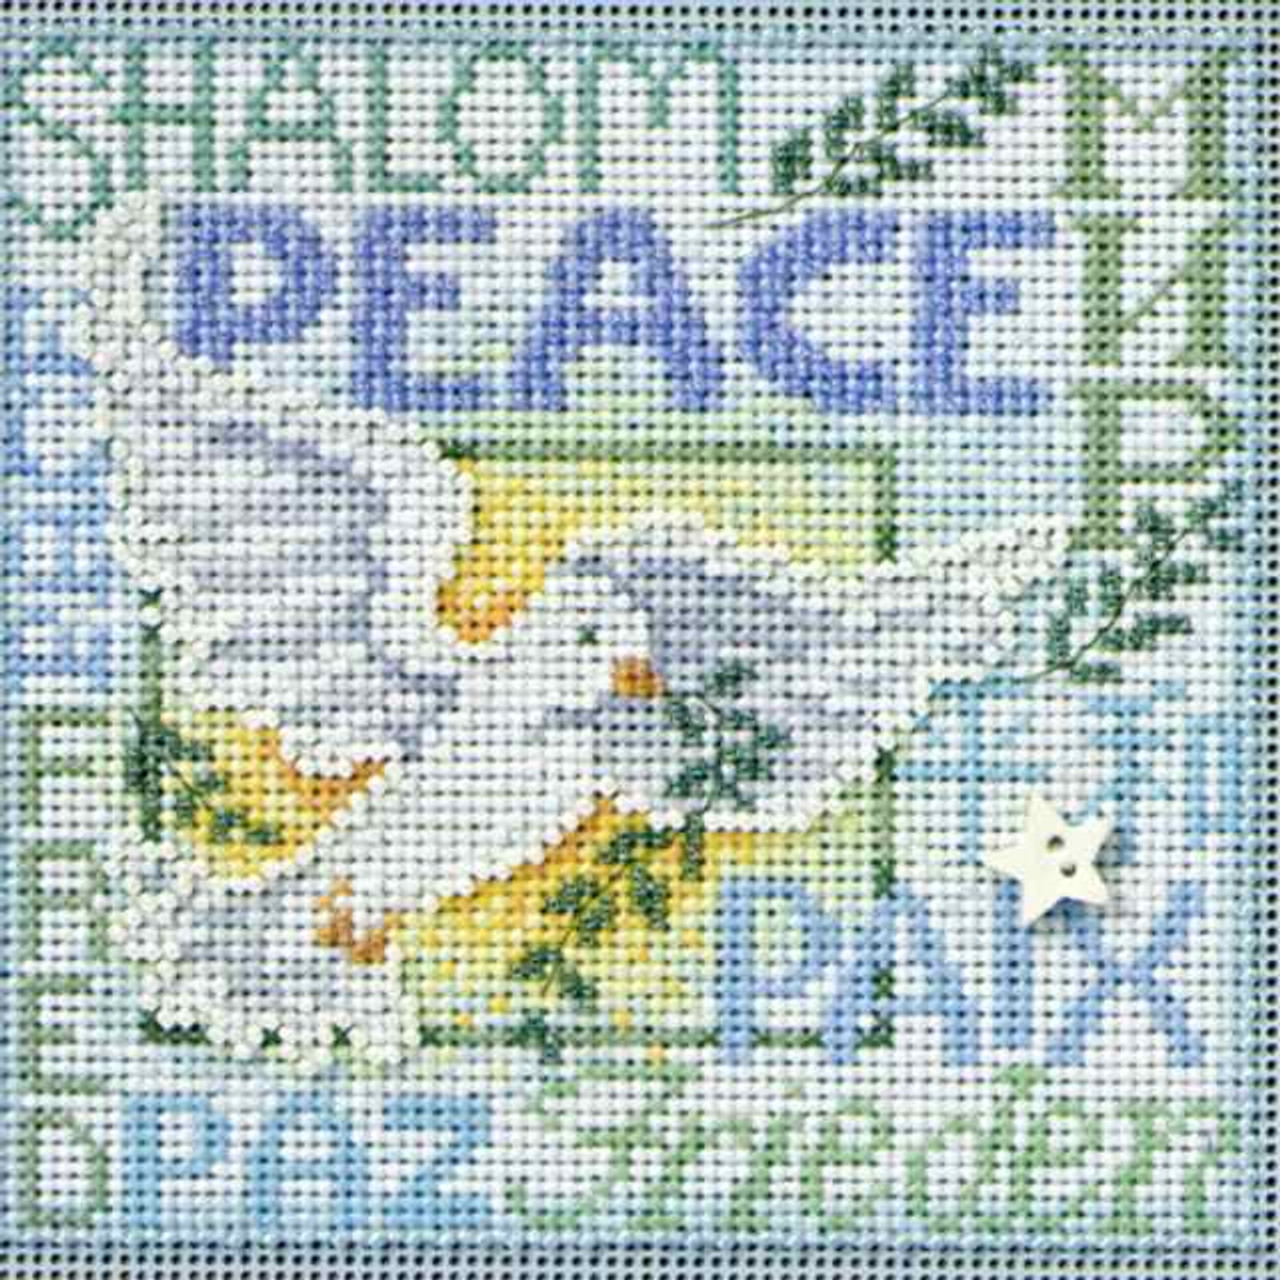 World Peace Cross Stitch Kit Mill Hill 2012 Buttons & Beads Winter